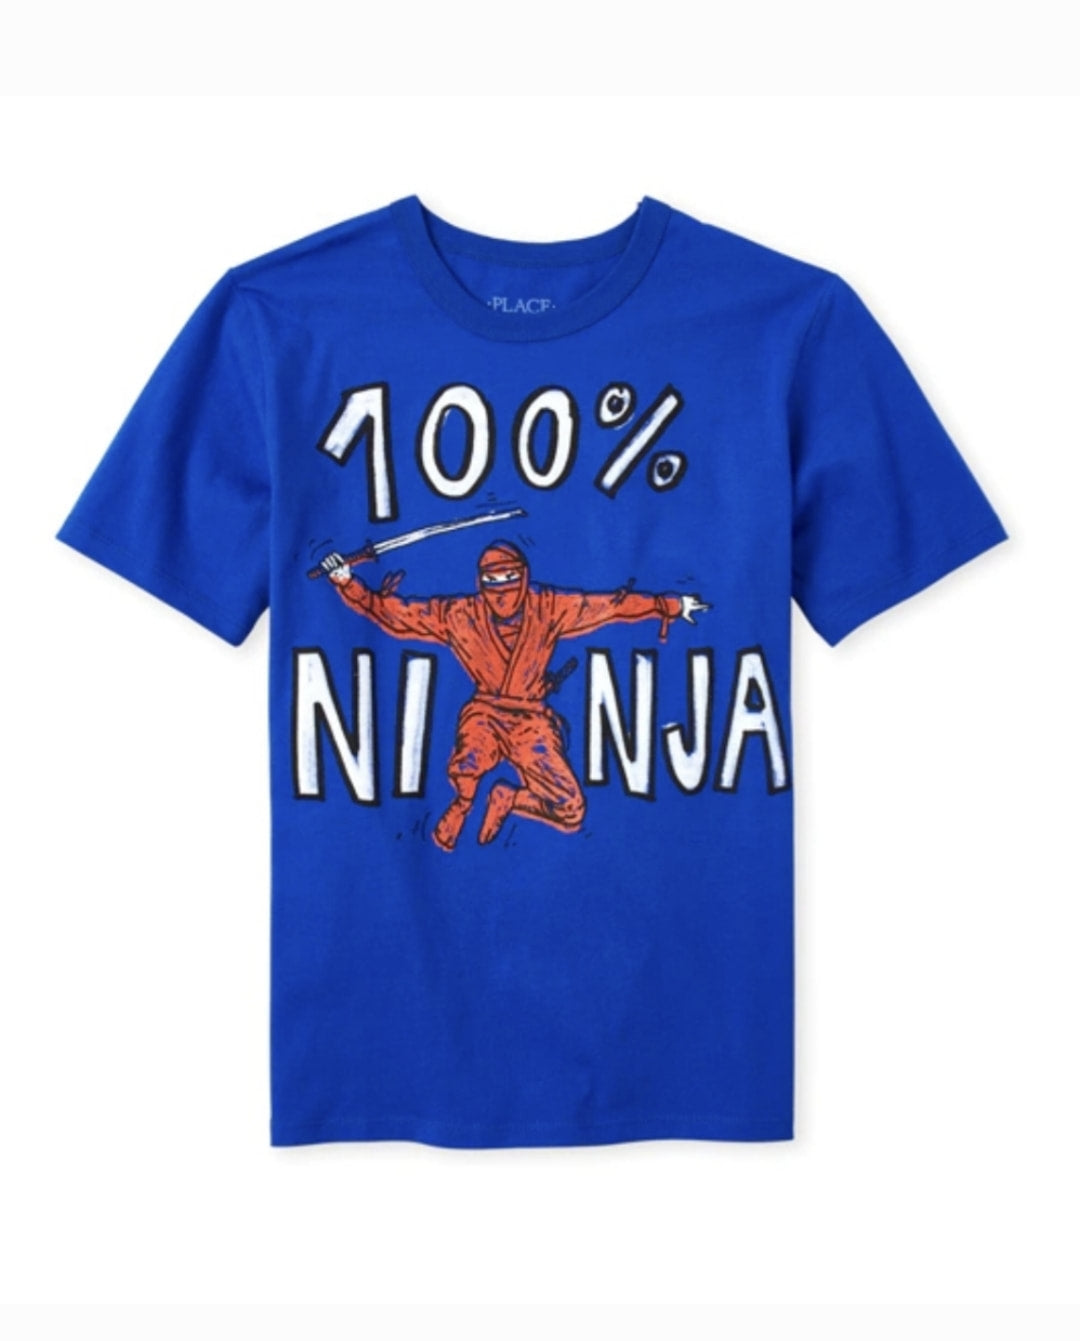 Children's Place 100% Ninja Graphic Tee